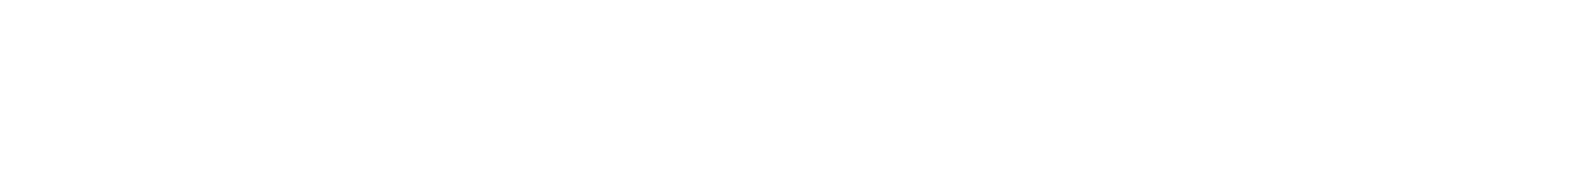 Sampo Logo groß für dunkle Hintergründe (transparentes PNG)